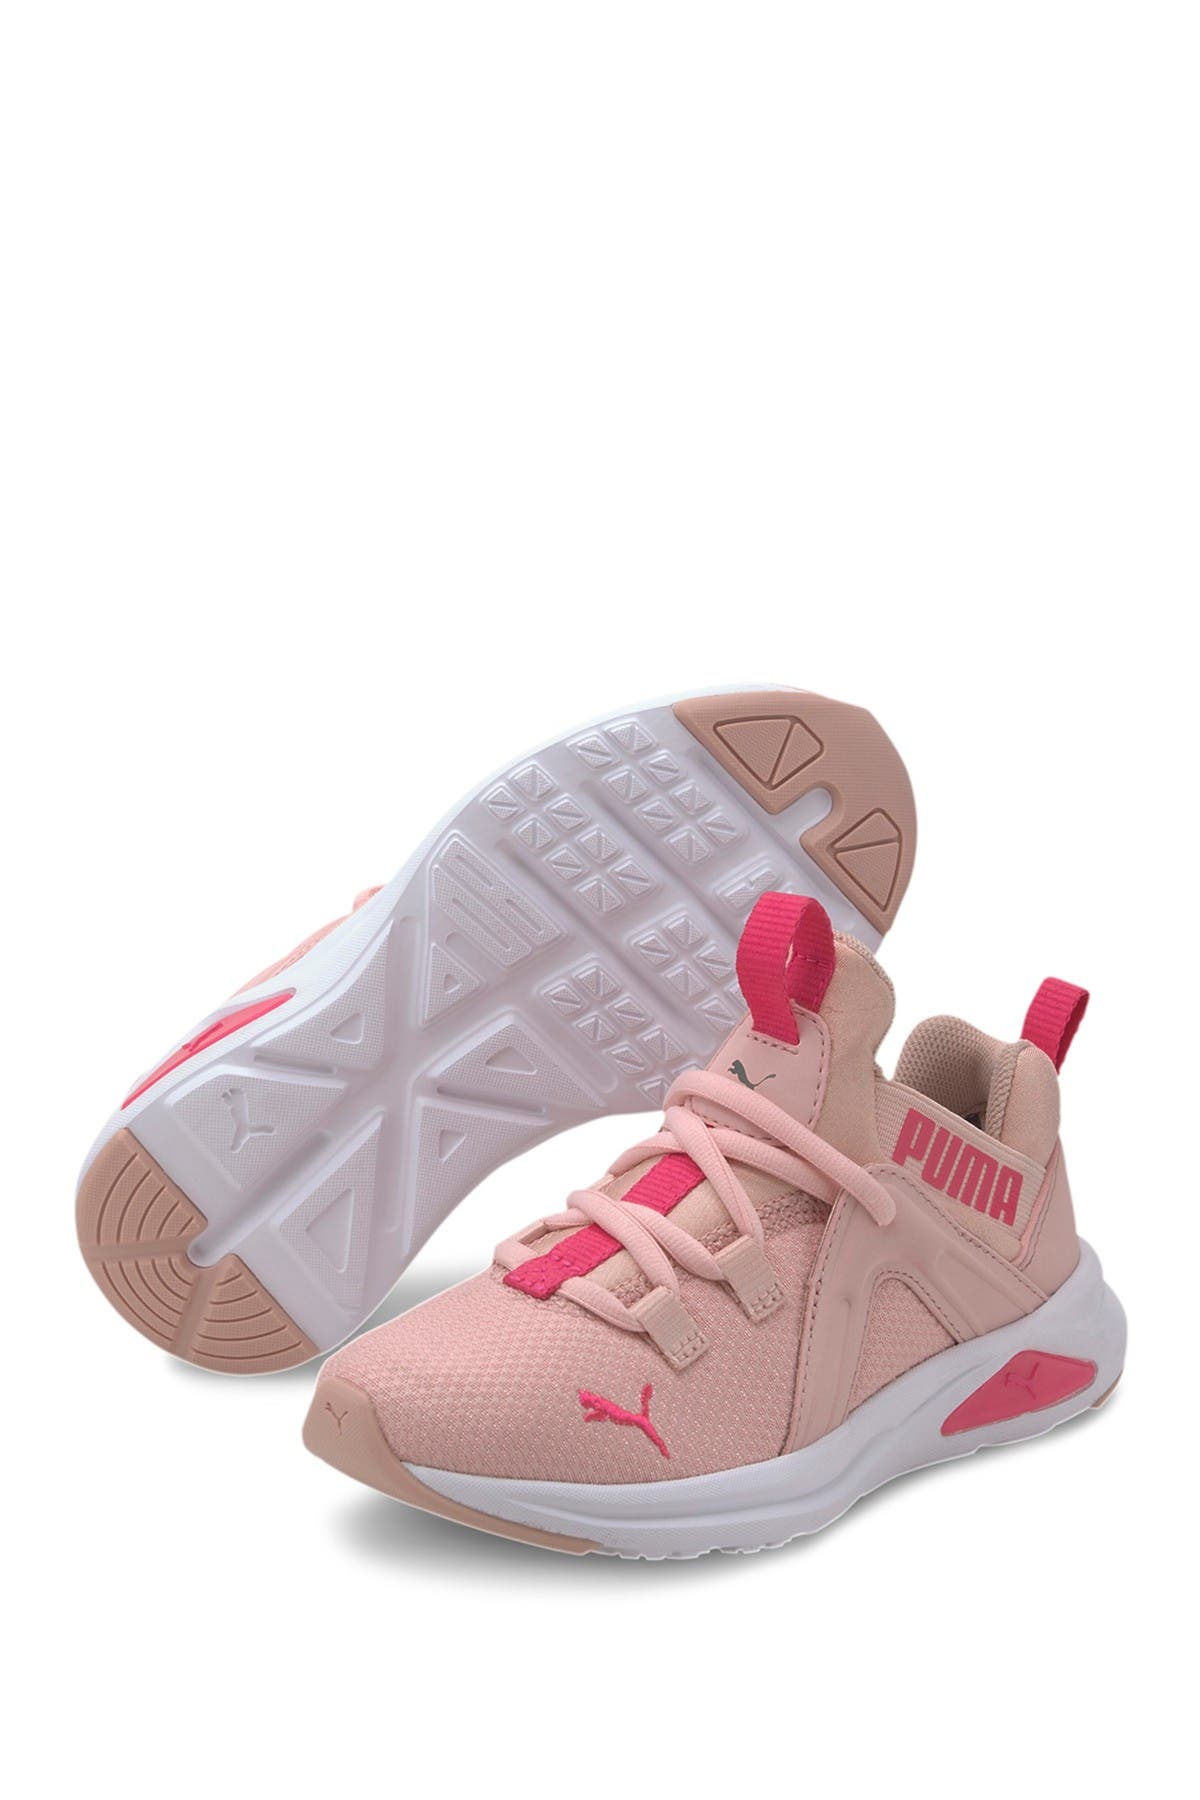 puma girl shoes pink